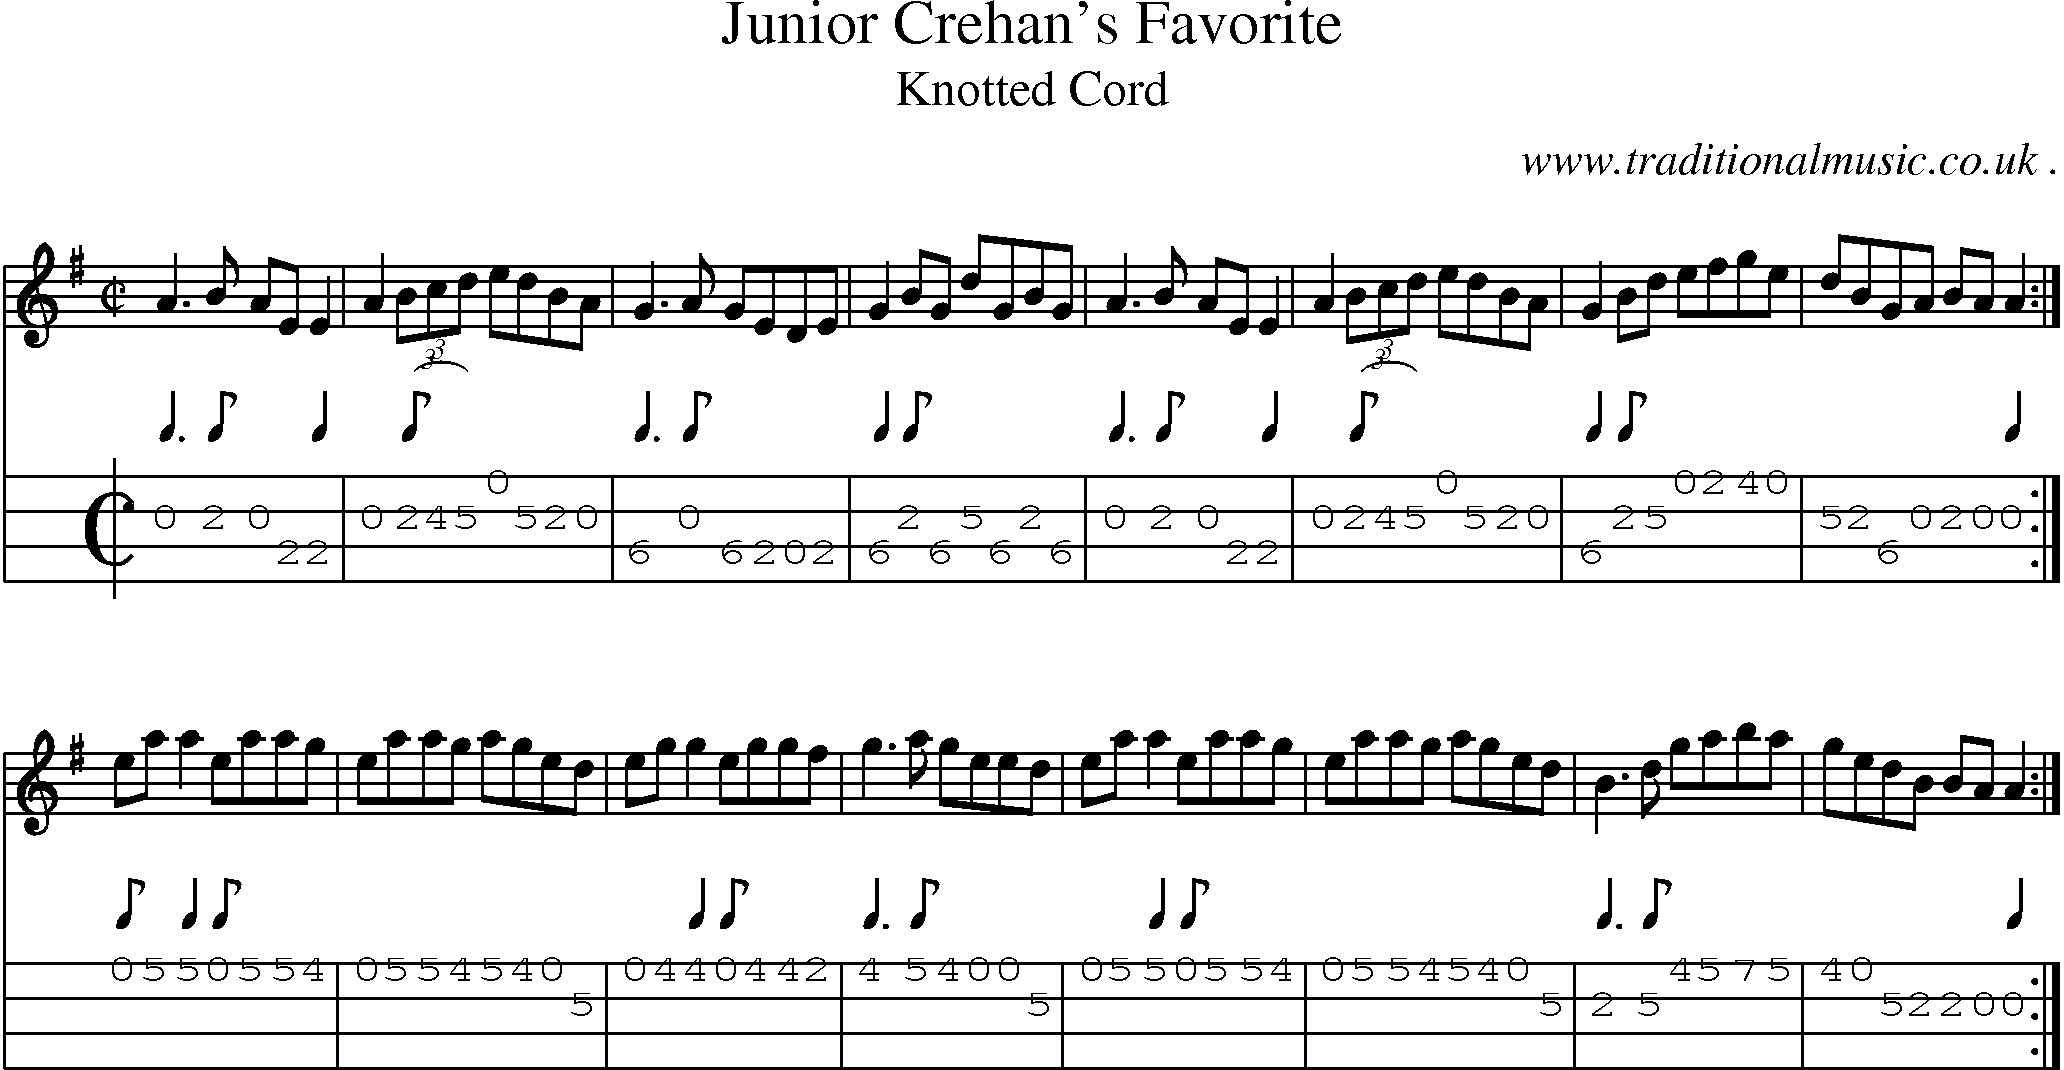 Sheet-Music and Mandolin Tabs for Junior Crehans Favorite